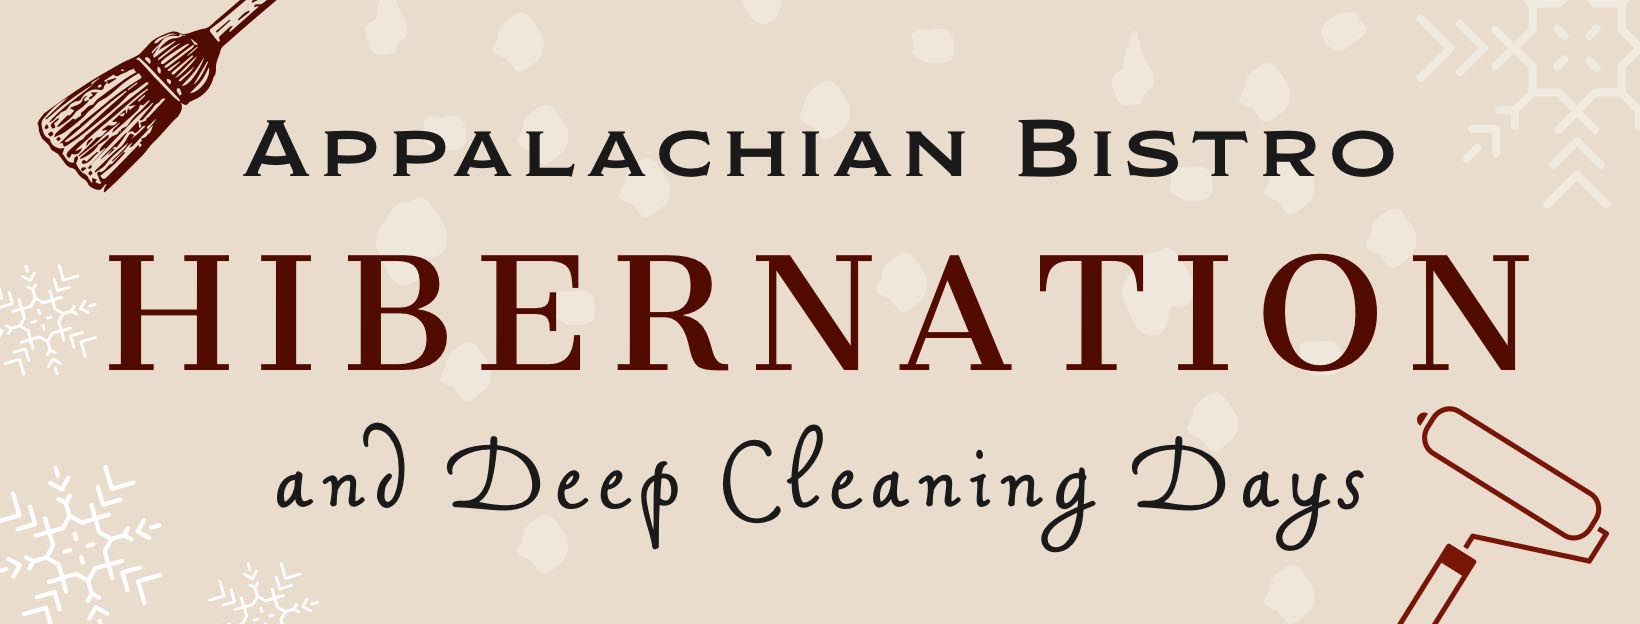 Appalachian Bistro Hibernation & Deep Cleaning Days